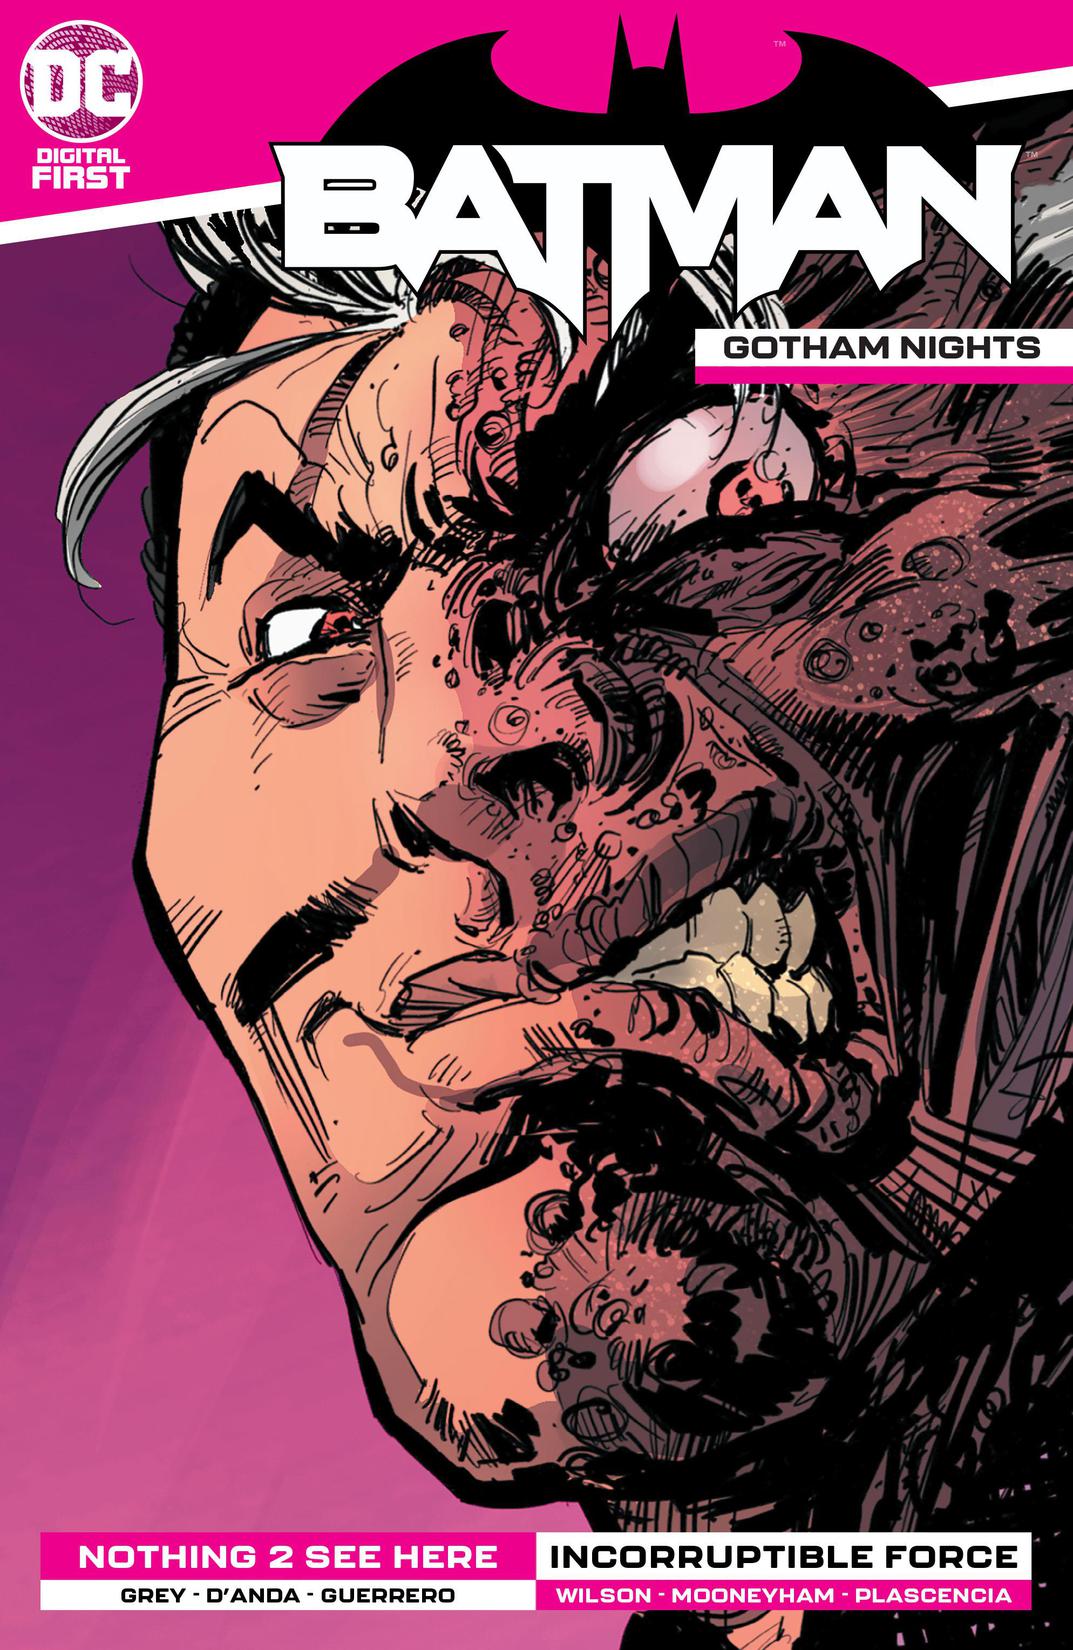 Batman: Gotham Nights #13 preview images